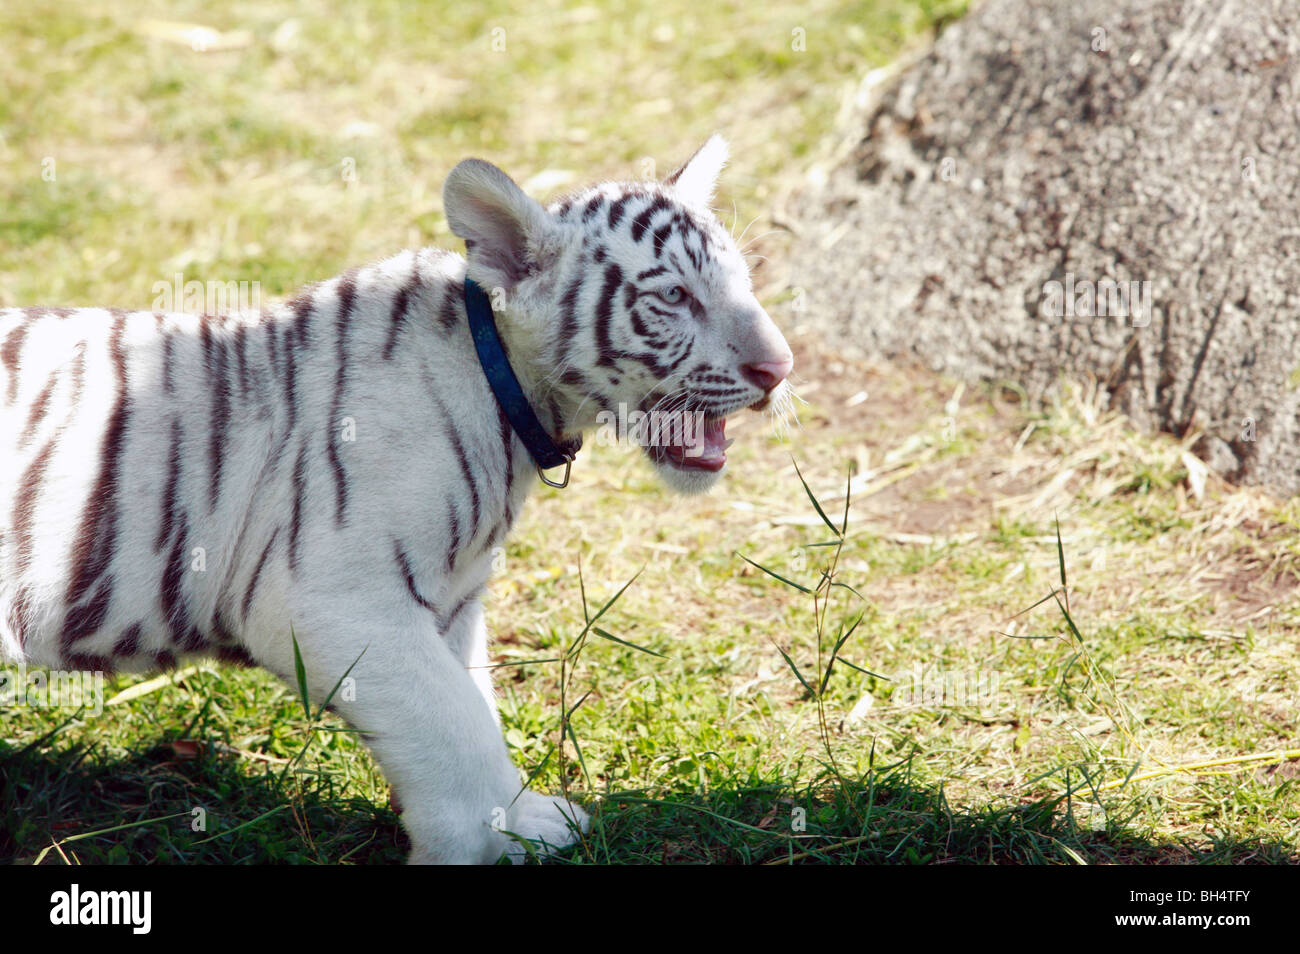 A Young Bengal Tiger Cub Posing At Cougar Mountain Zoo Stock Photo Alamy